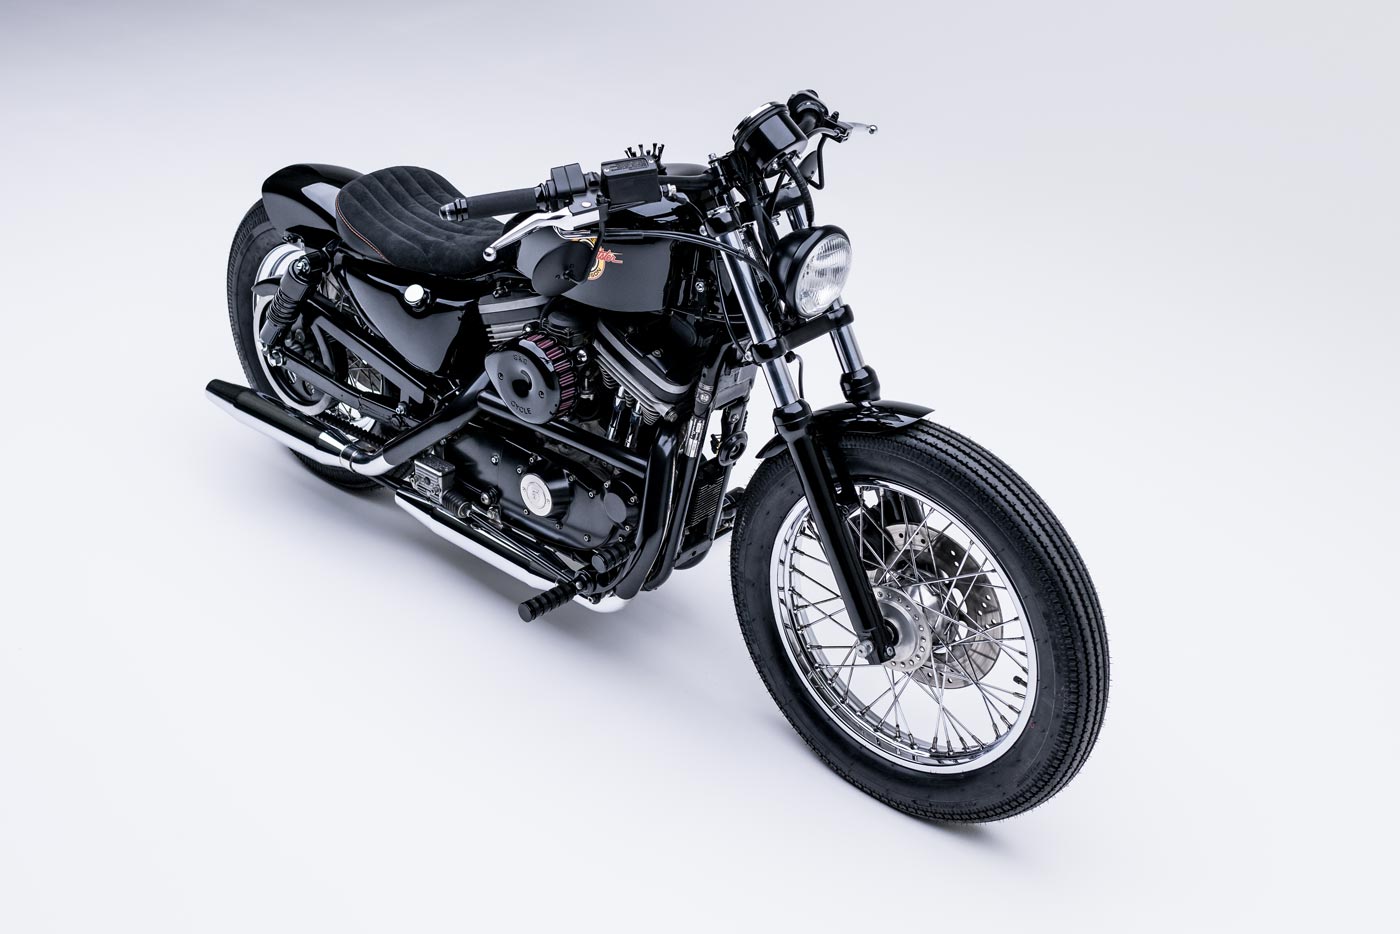 Harley Sportster Custom Bike